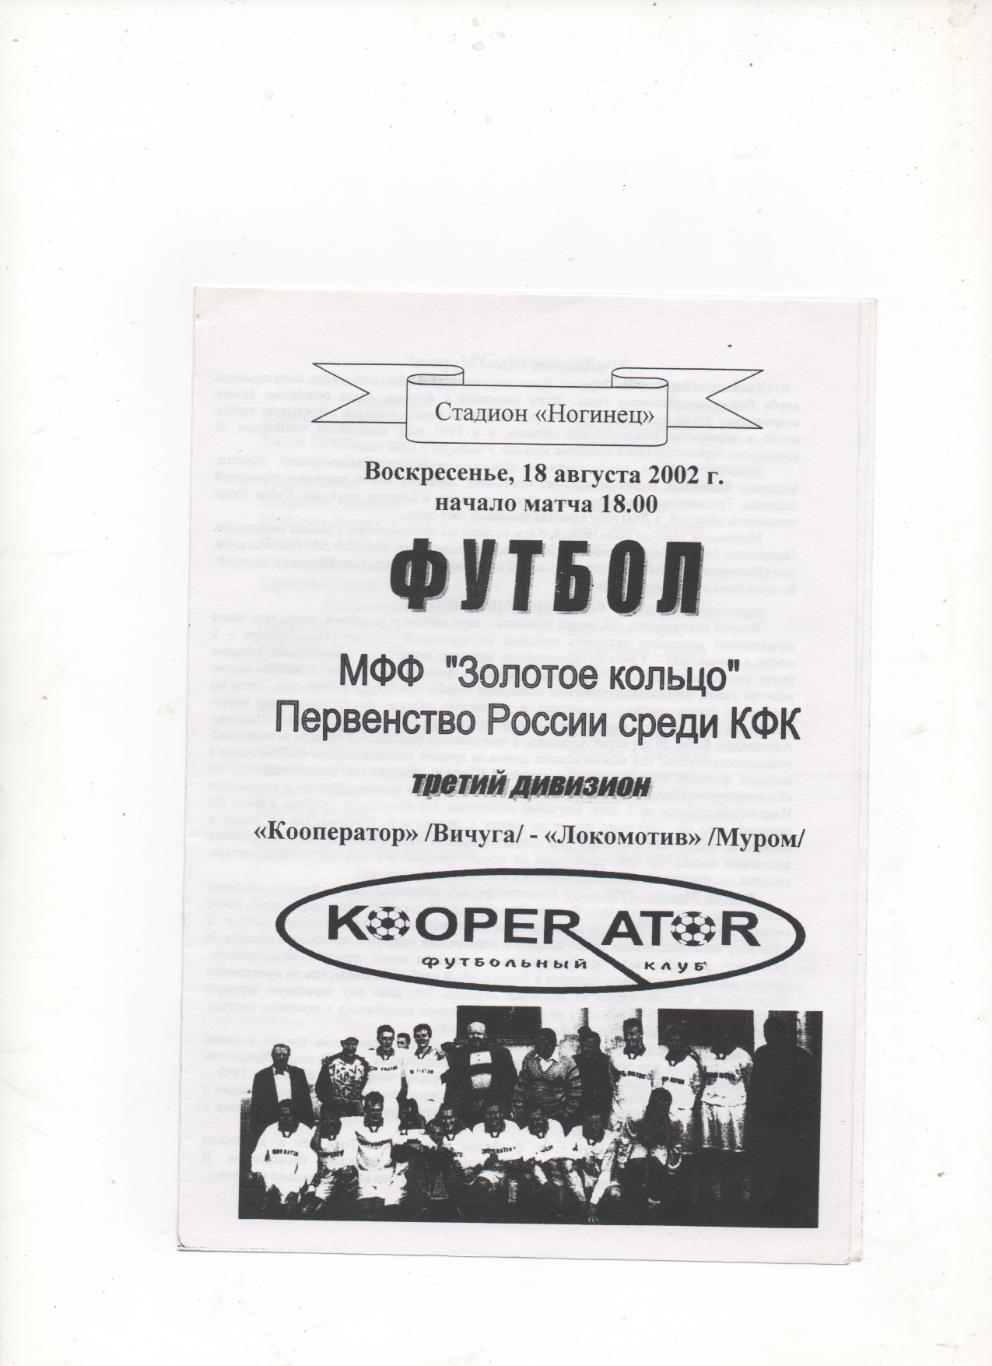 Кооператор (Вичуга) - Локомотив (Муром) - 2002.